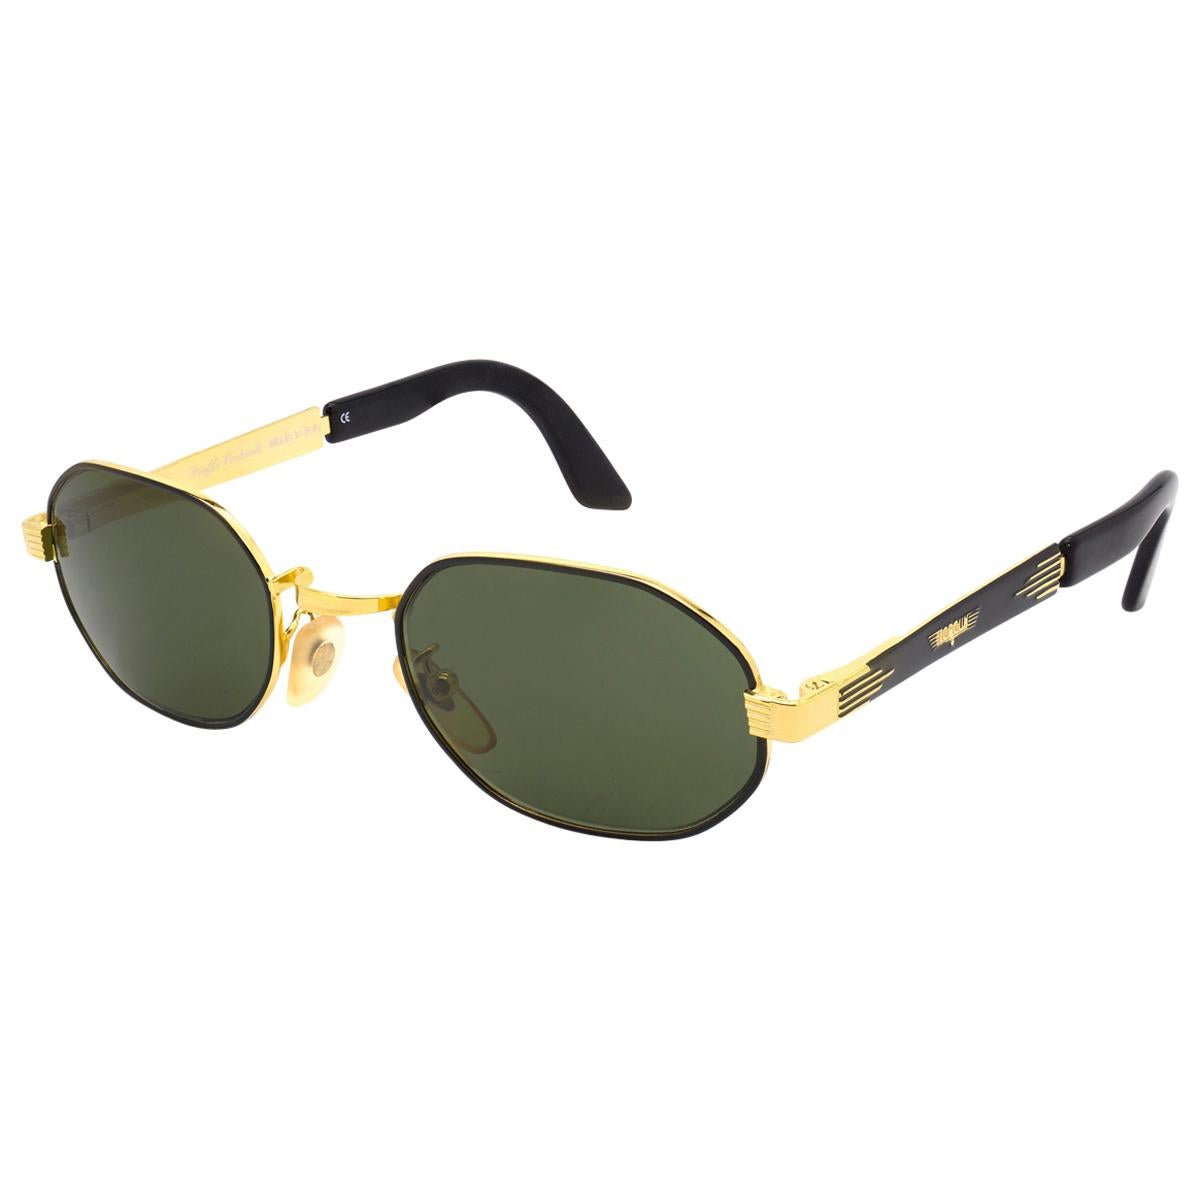 Top Gun hexagonal vintage sunglasses, ITALY 90s